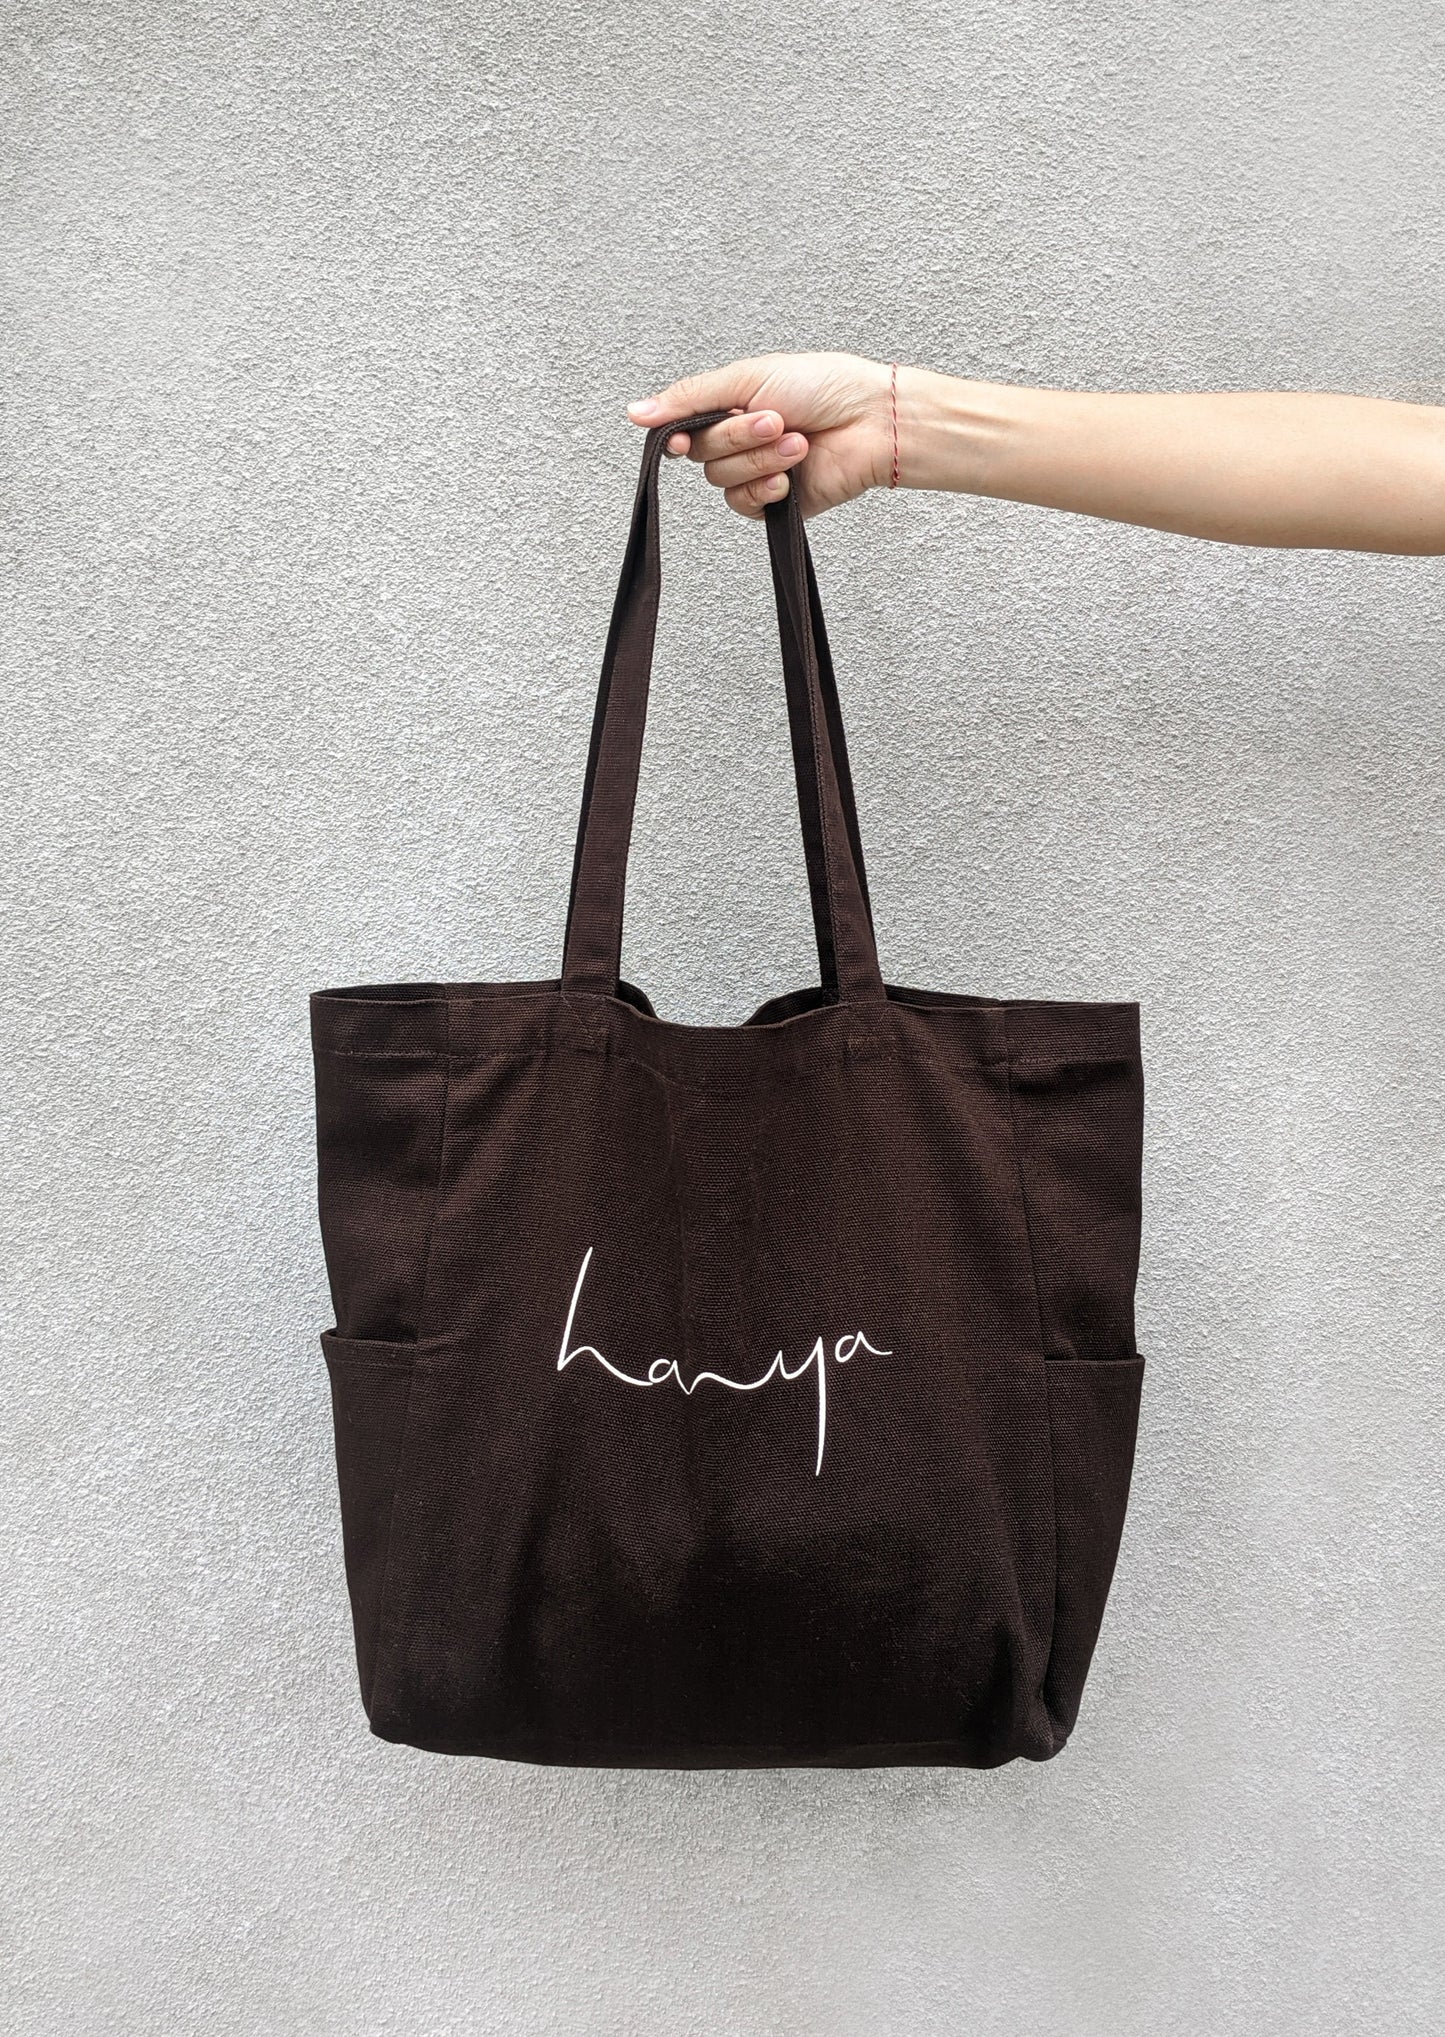 Unisex durable canvas tote bag medium brown | Merchandise gift